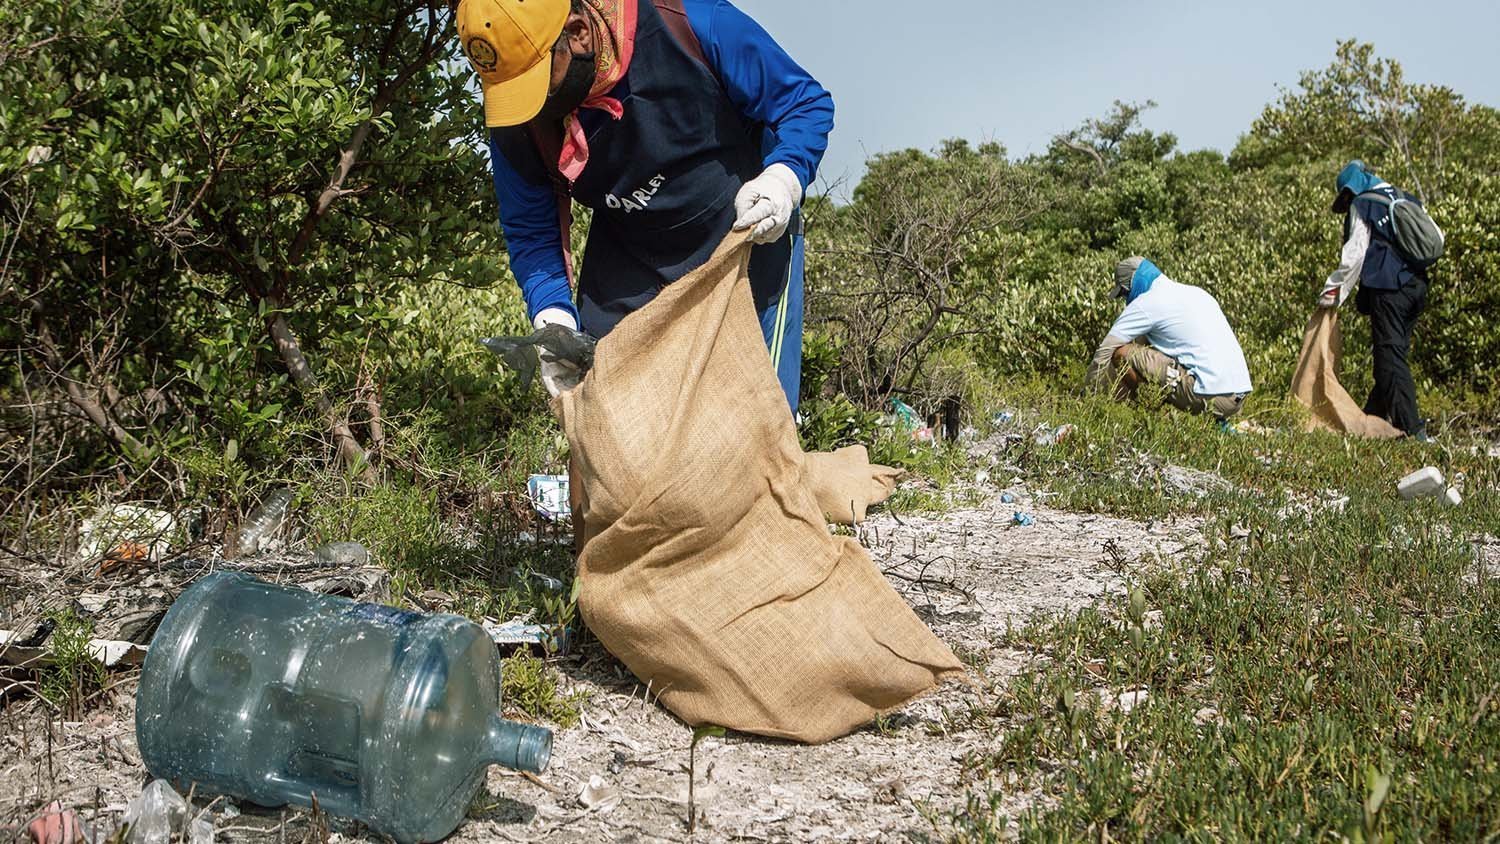  Parley cleanup in Cayo Sucio, Mexico 